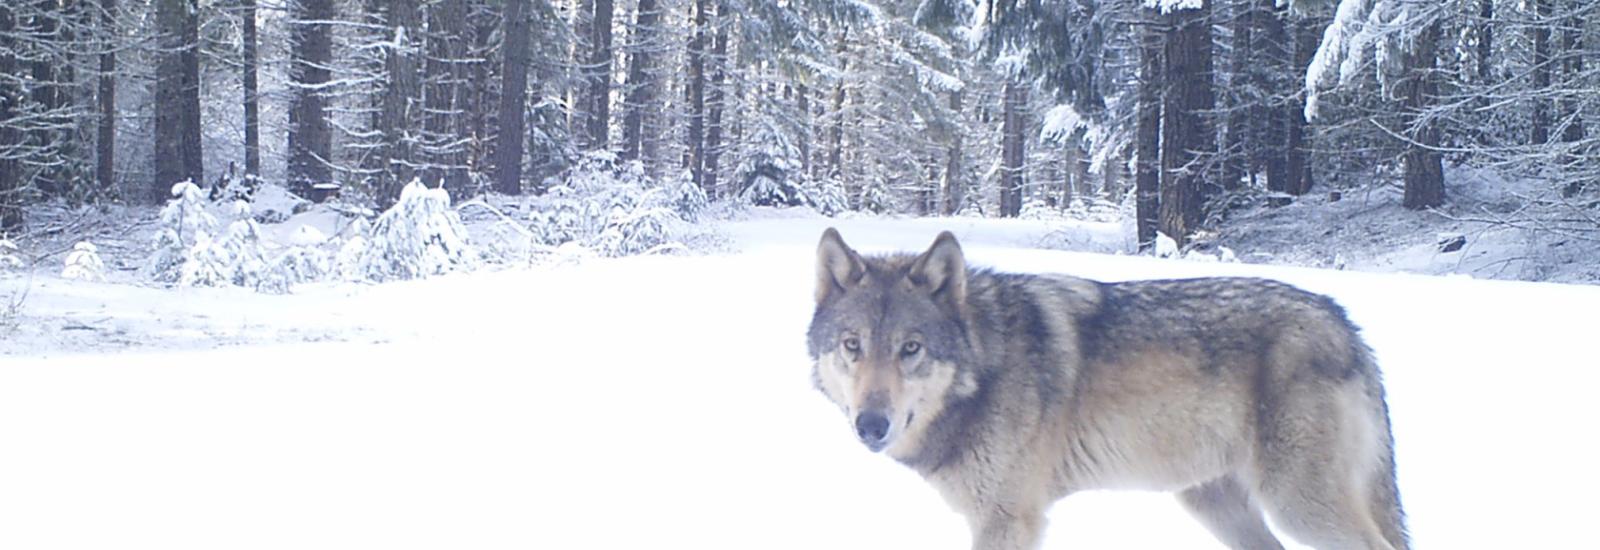 Endangered gray wolf